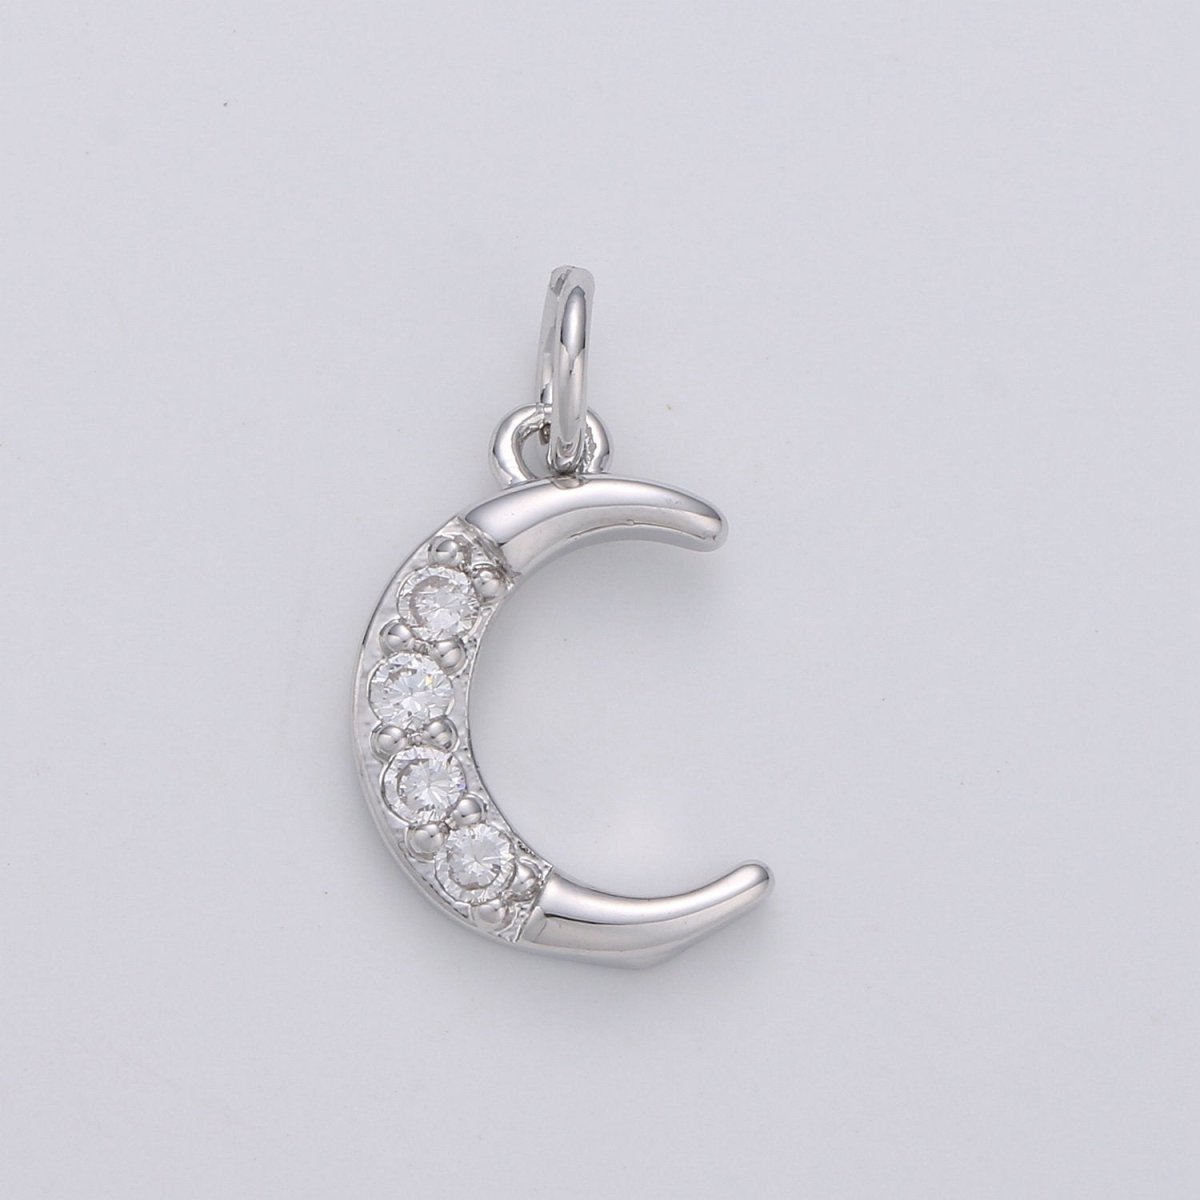 Dainty Crescent Moon Charm Pendant- Micro Pave Silver, Gold Filled Half moon charm pendant, Crescent Moon Pendant Celestial Jewelry D-182 D-183 - DLUXCA